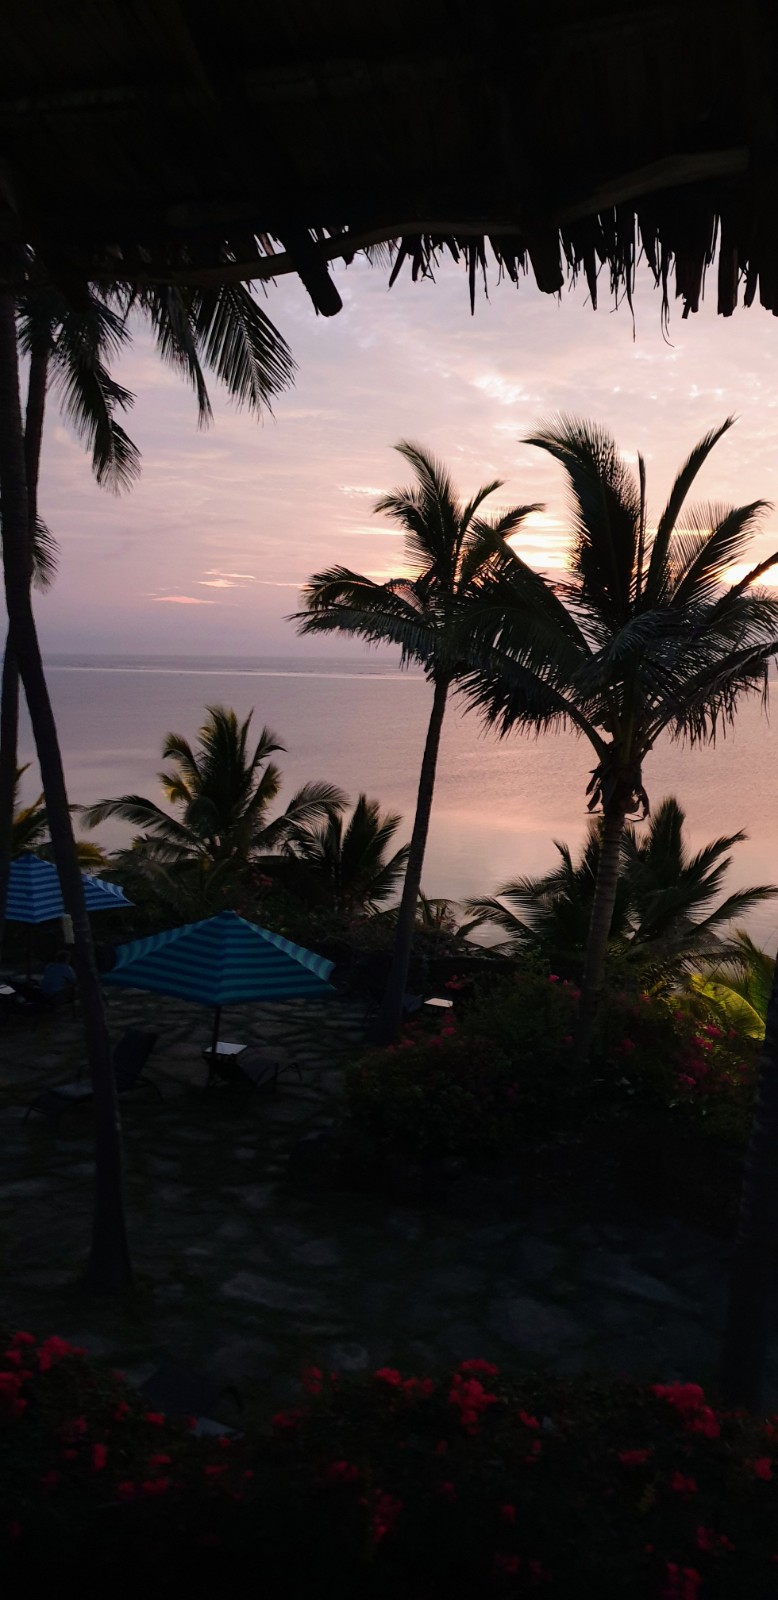 Blick aufs Meer vom Hotel Bahari Beach Kenia